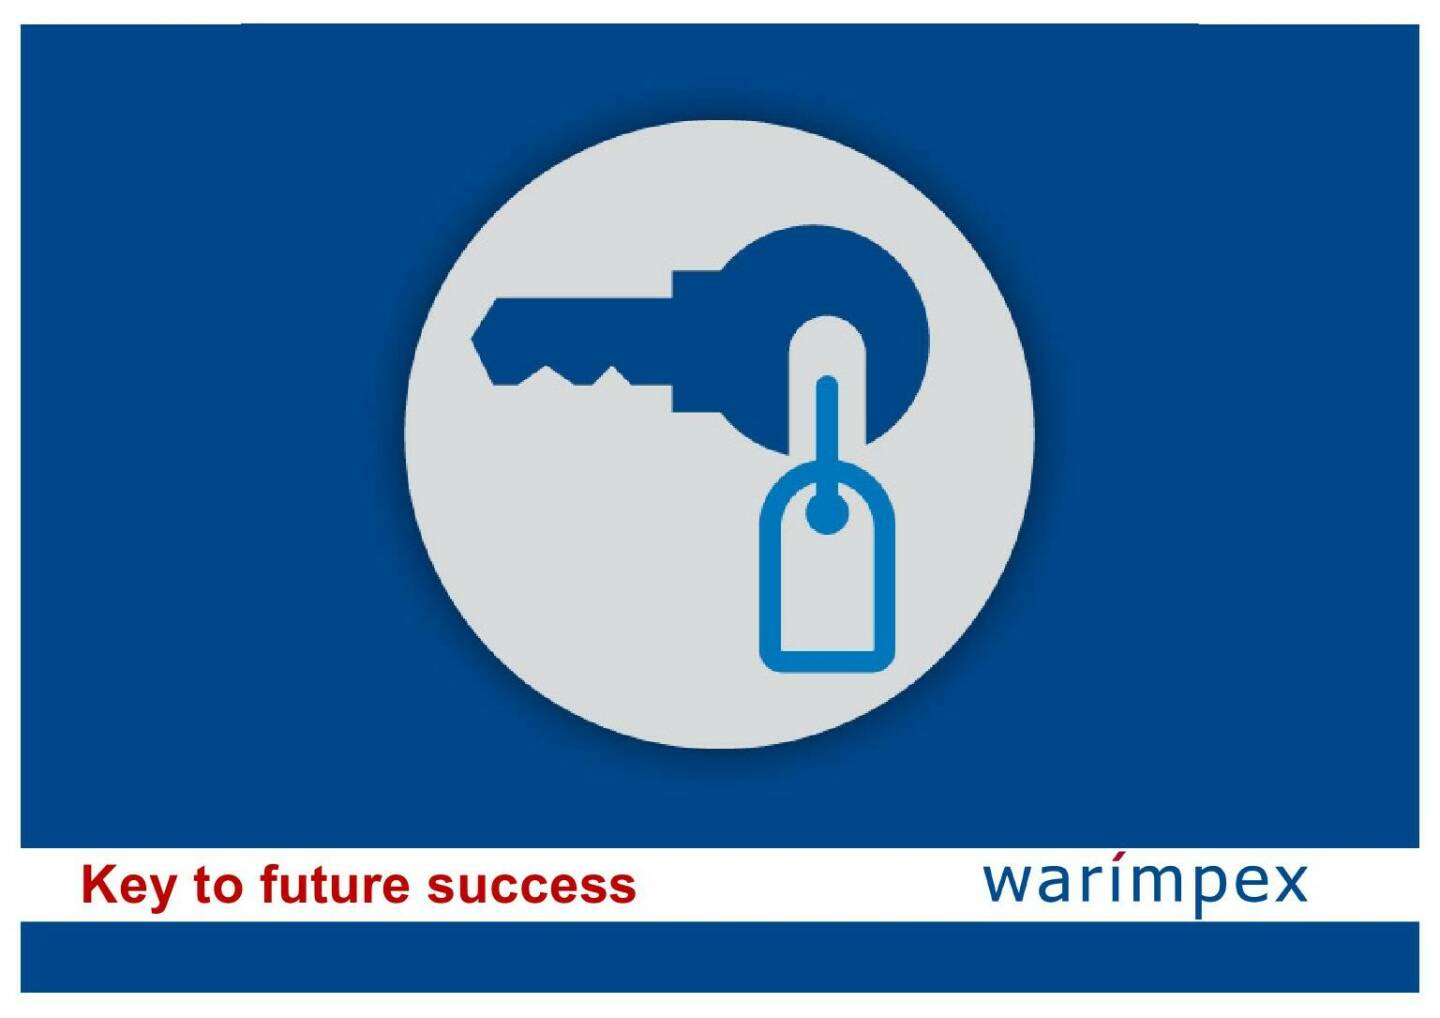 Warimpex - Key to future success